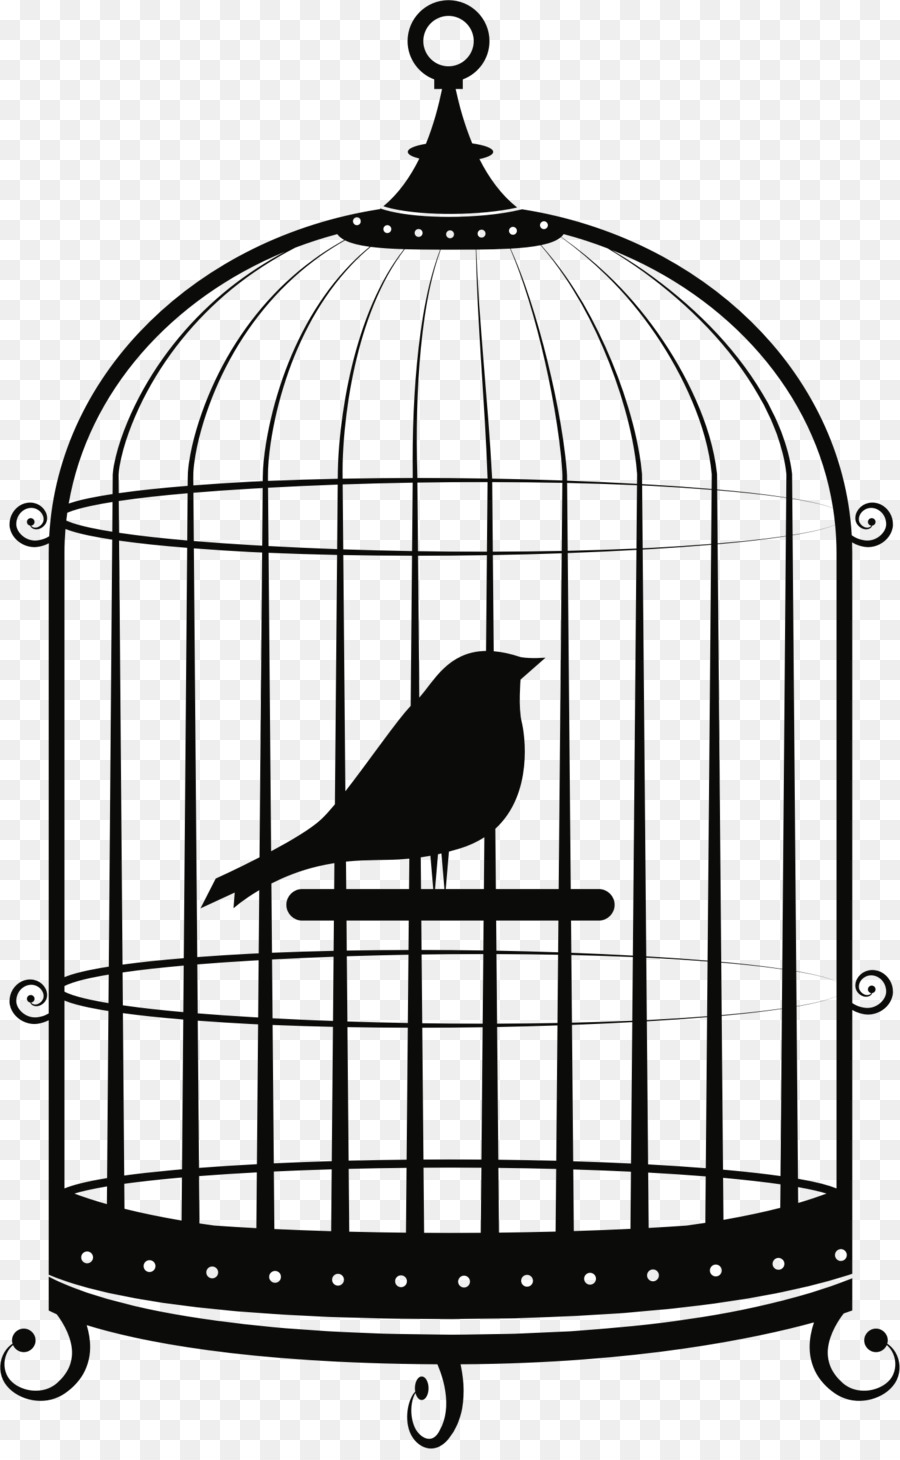 Birdcage Parrot Clip art - Bird png download - 1480*2383 - Free Transparent Bird png Download.